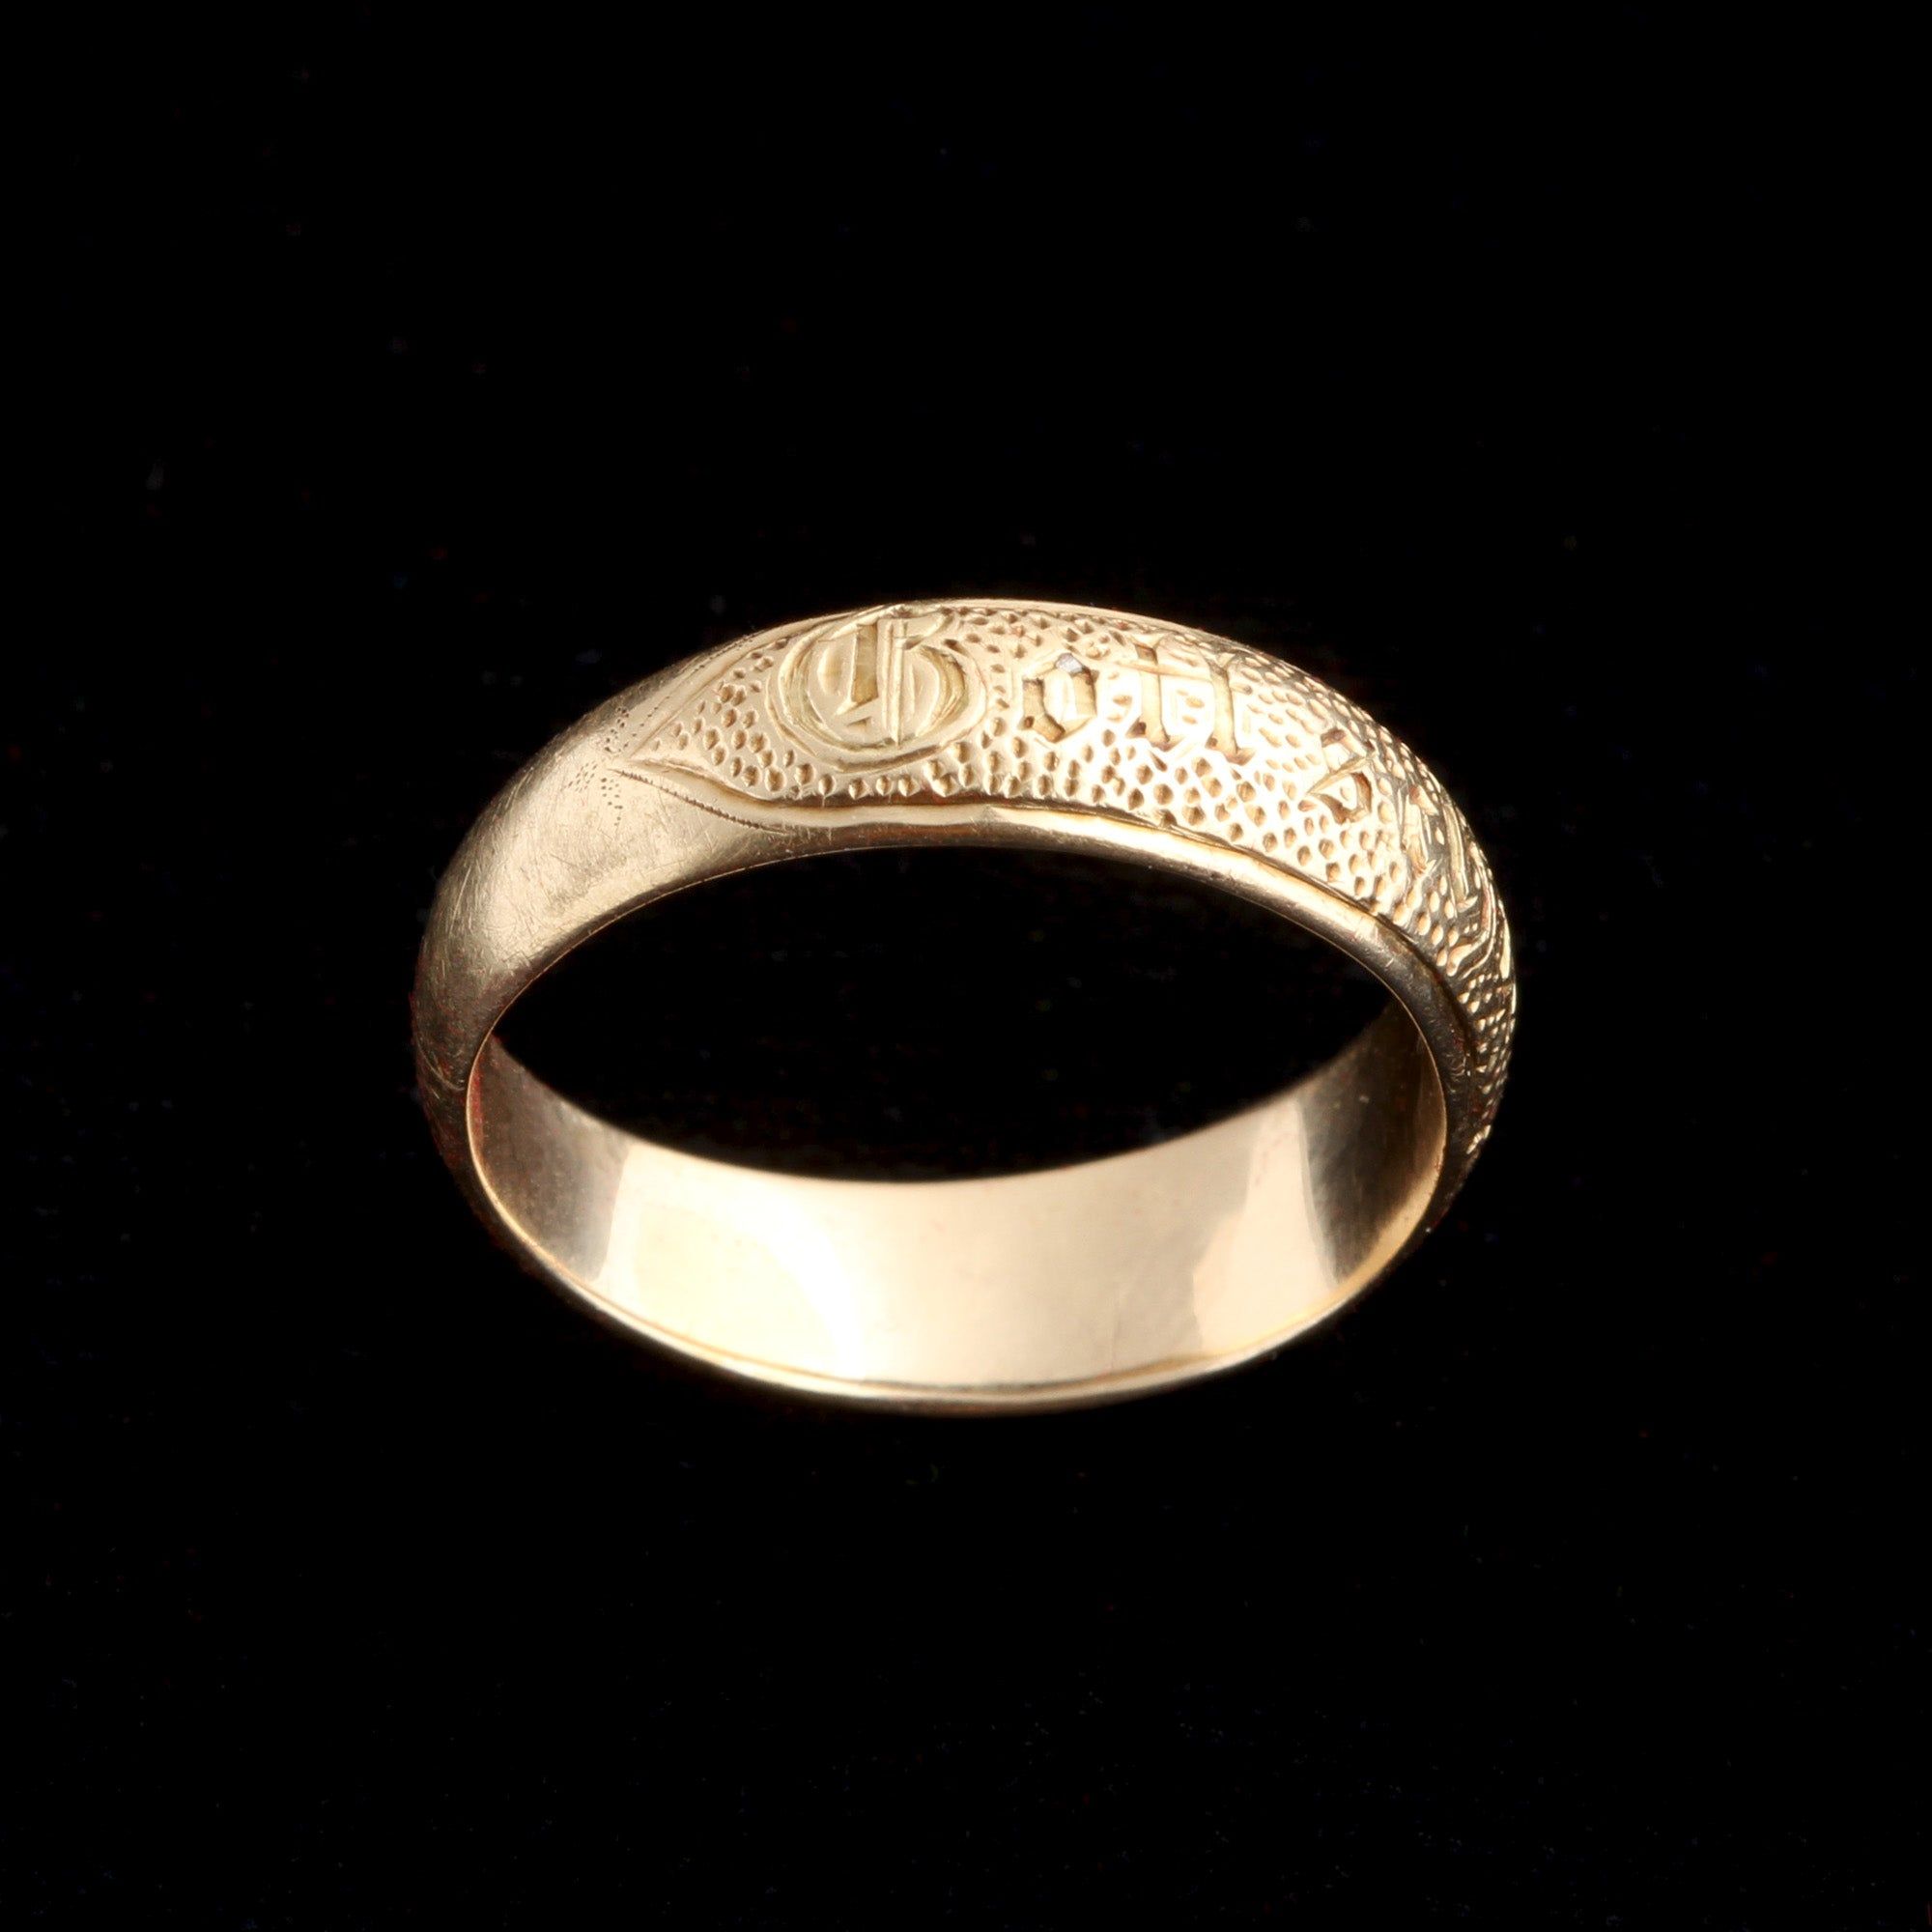 Late 19th Century "Gott Schütze Dich" Ring